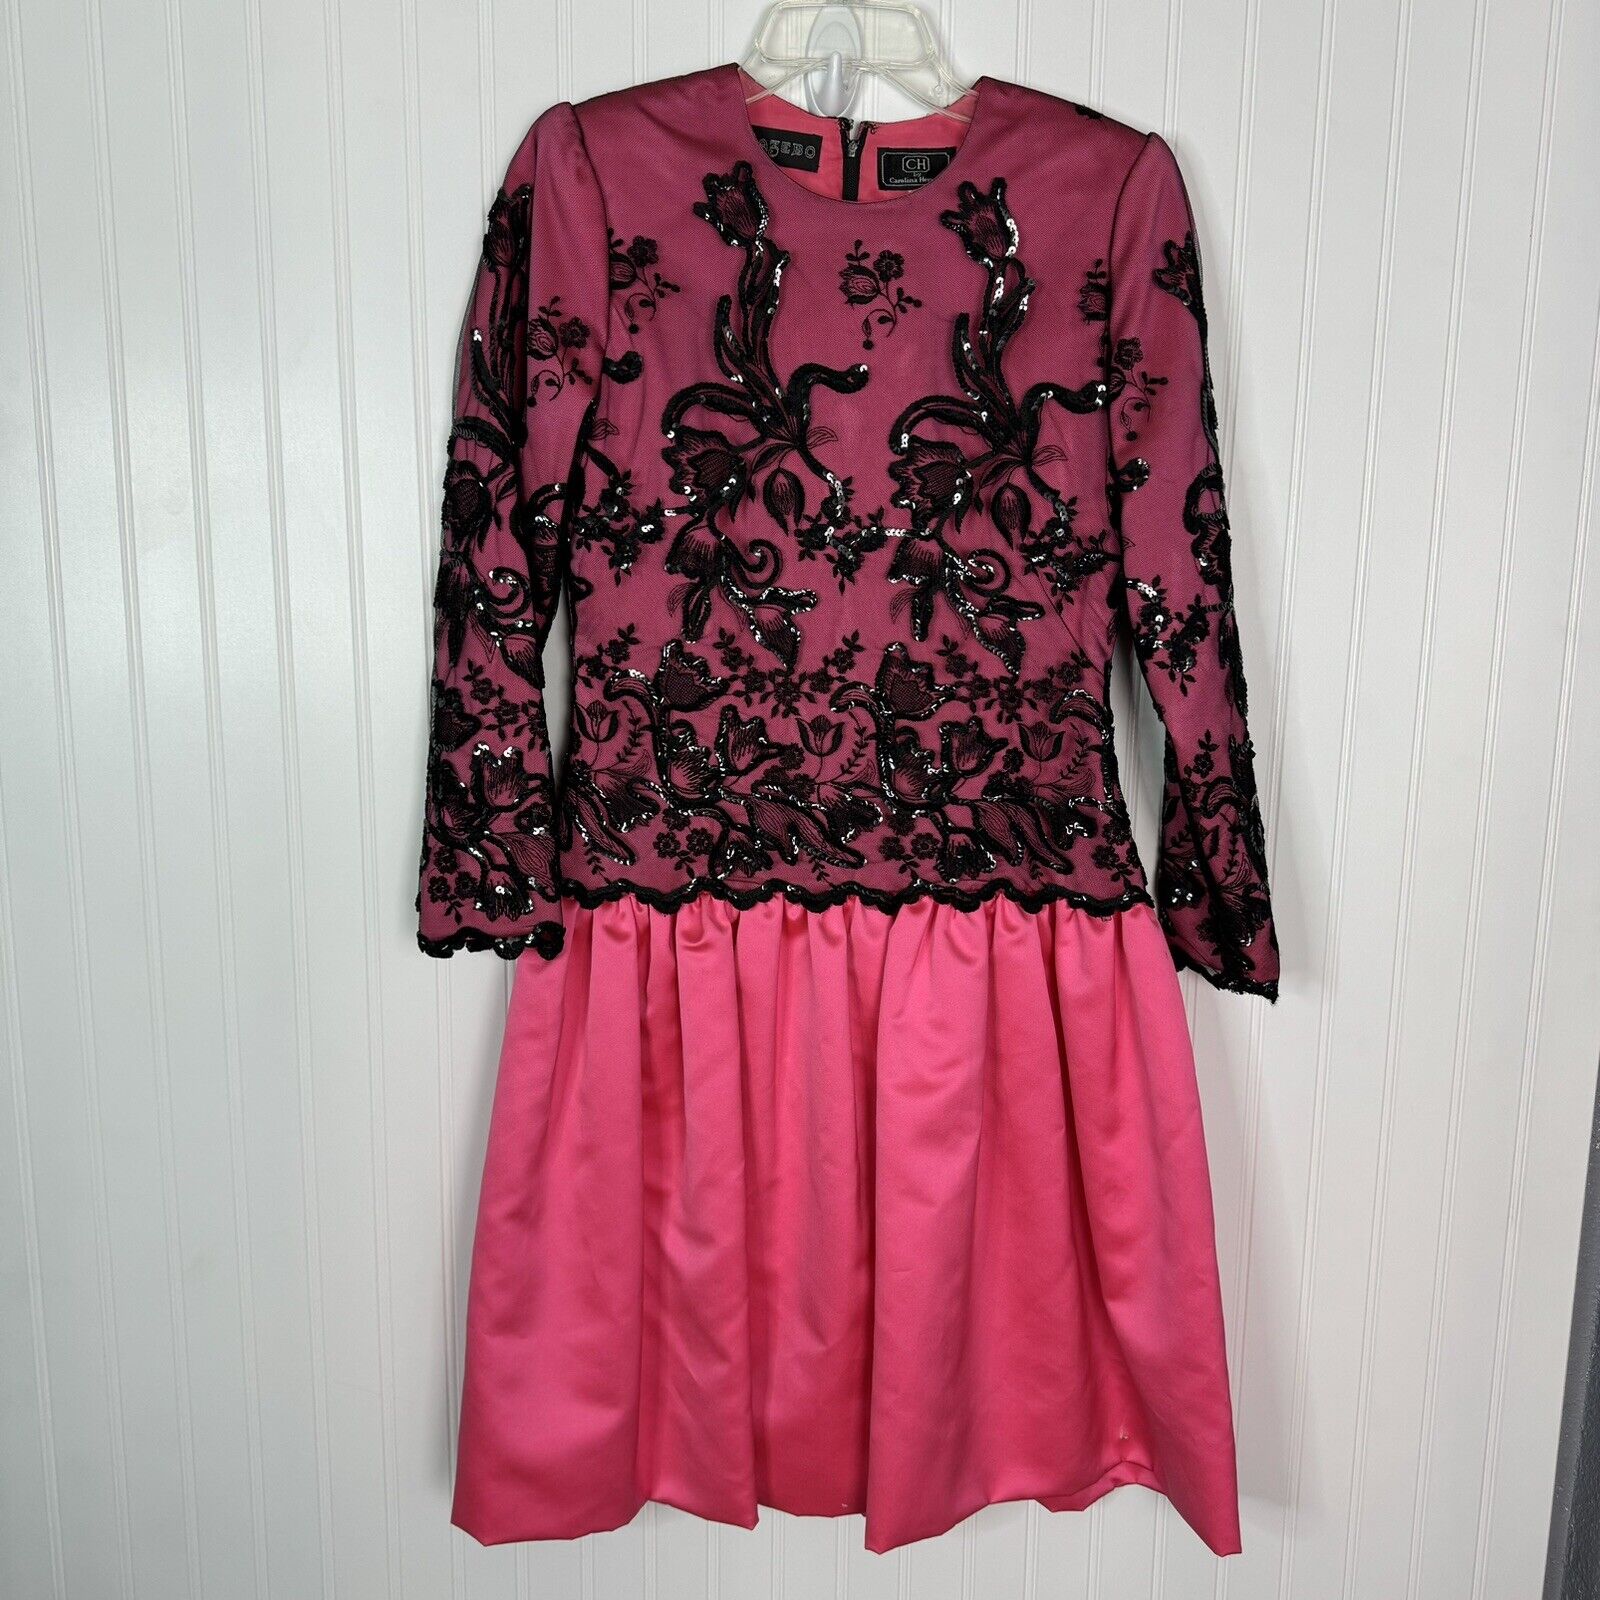 CH Carolina Herrera Dress 8 Vintage Pink Black Lace Sequins 80s Prom Party Mesh